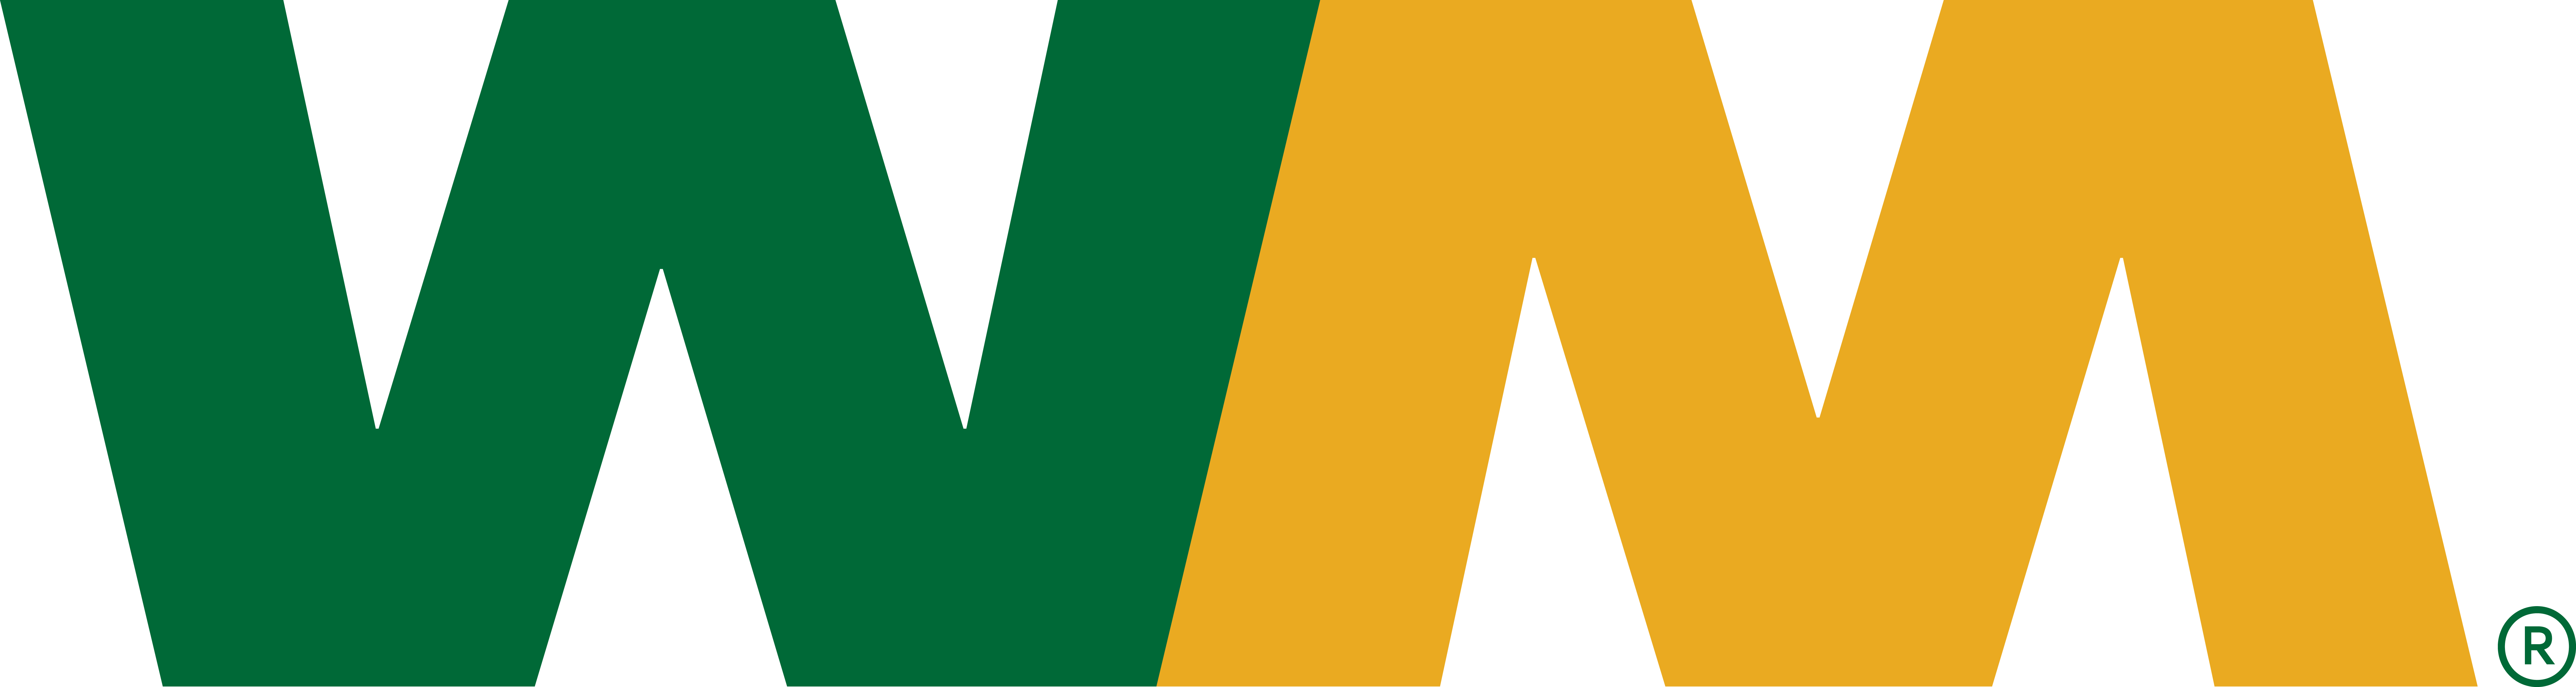 Waste Management Logo